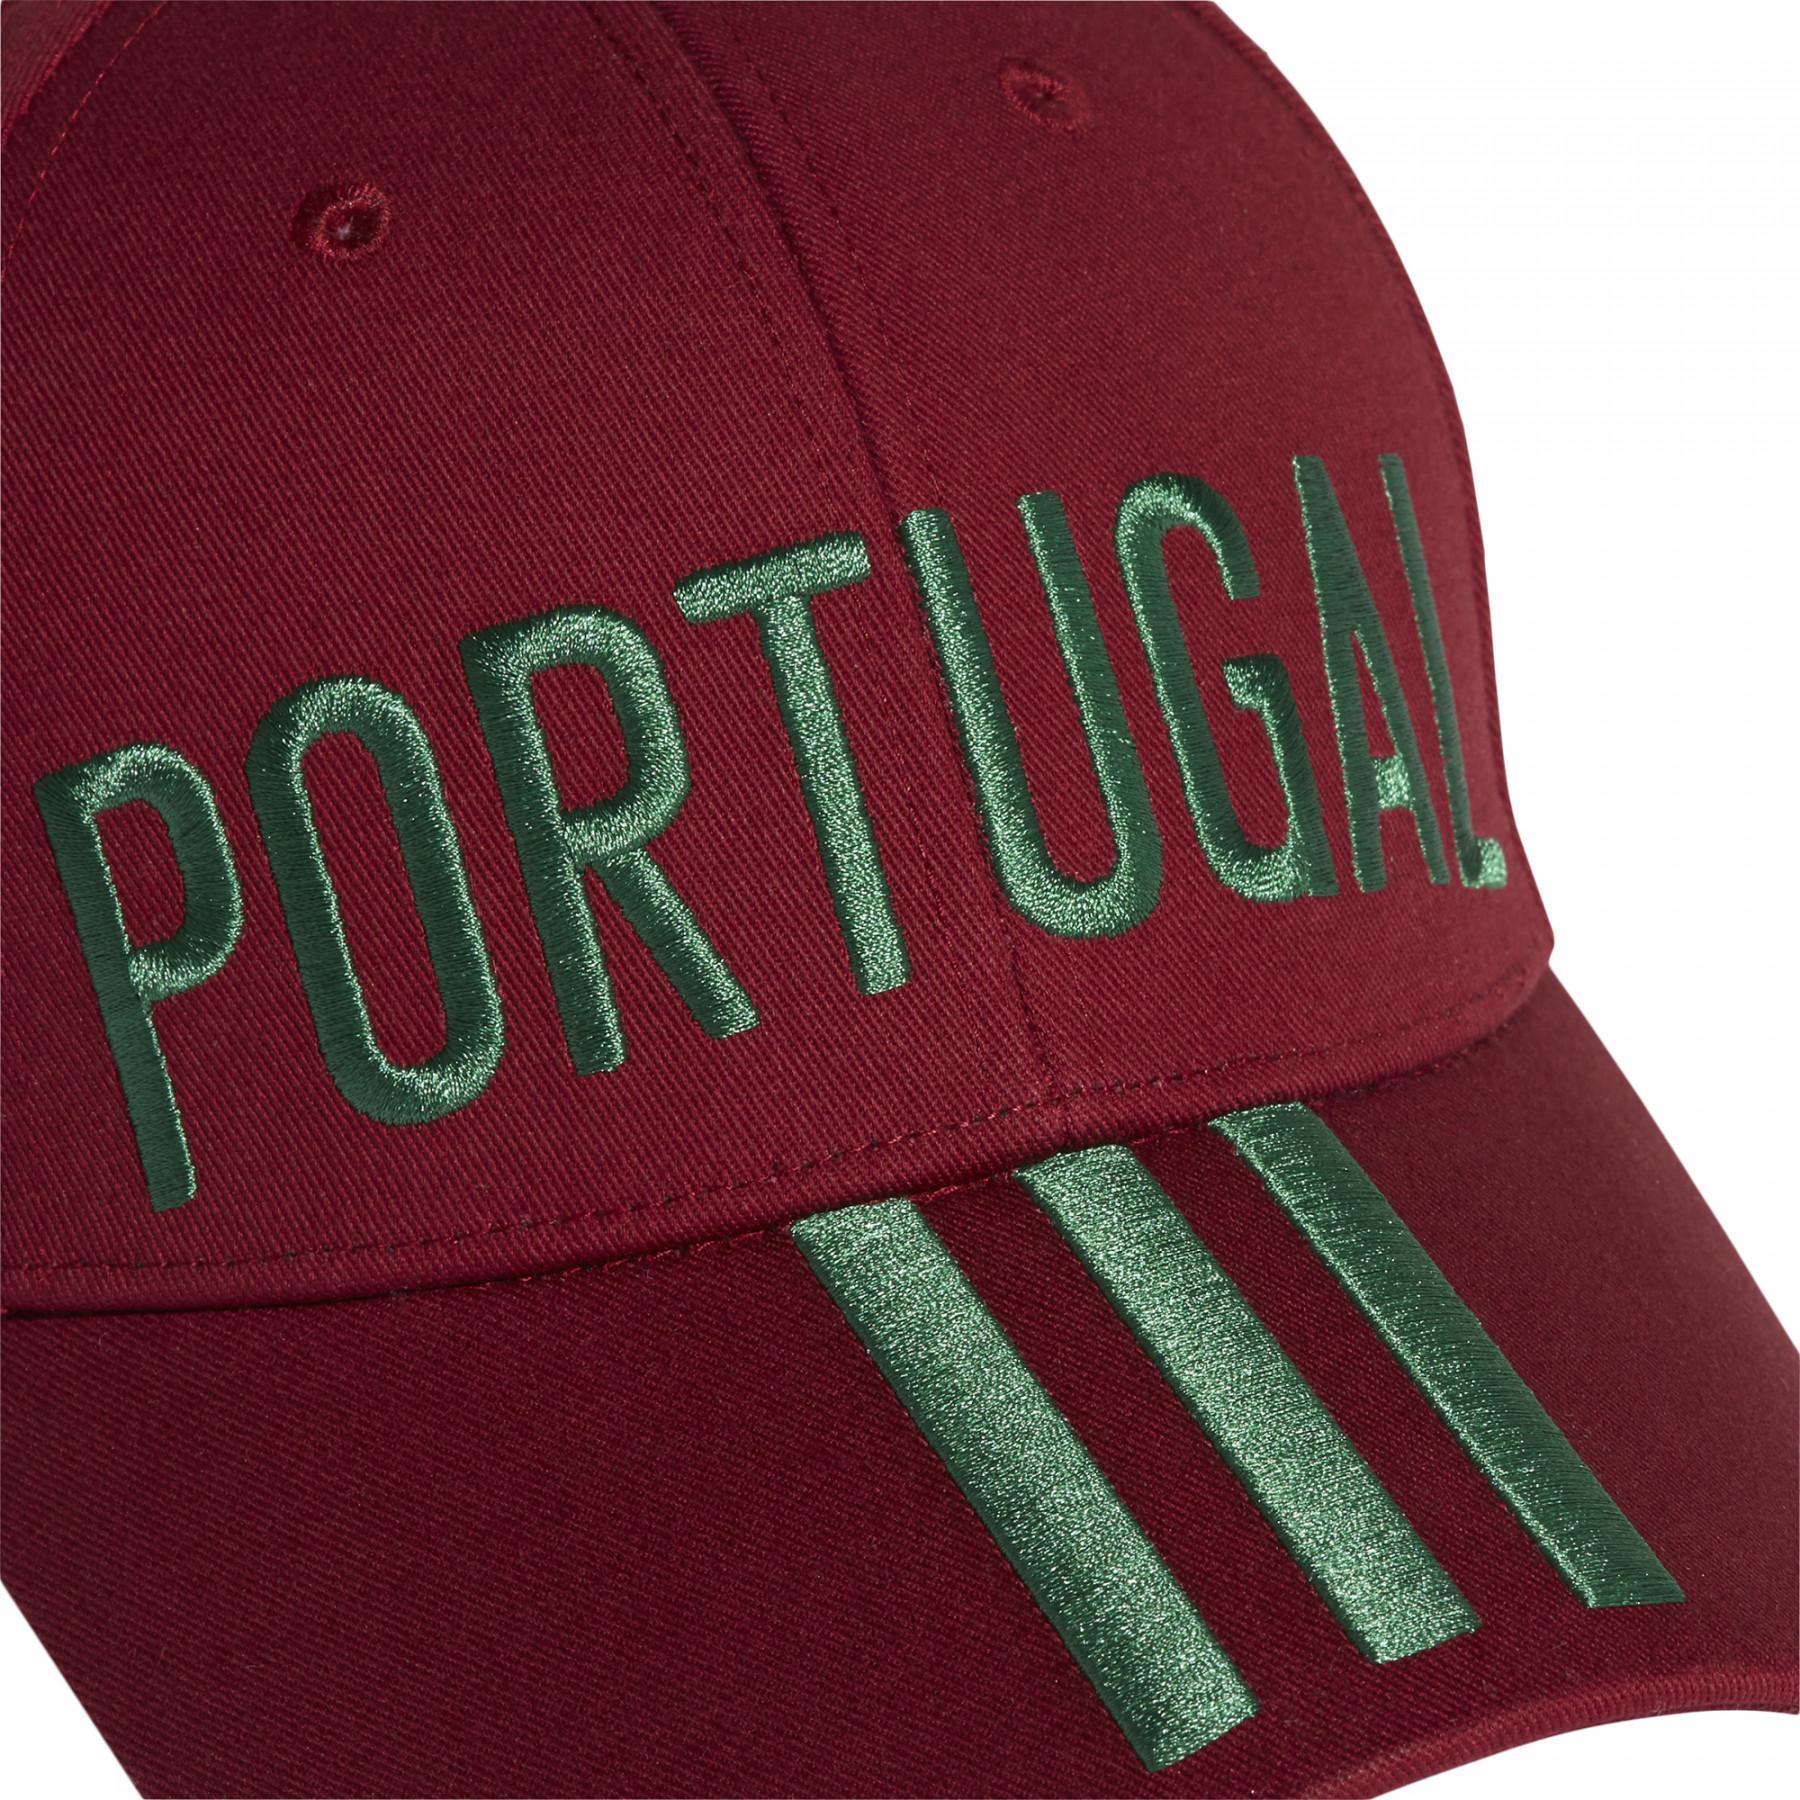 Cap adidas Portugal Fan Euro 2020